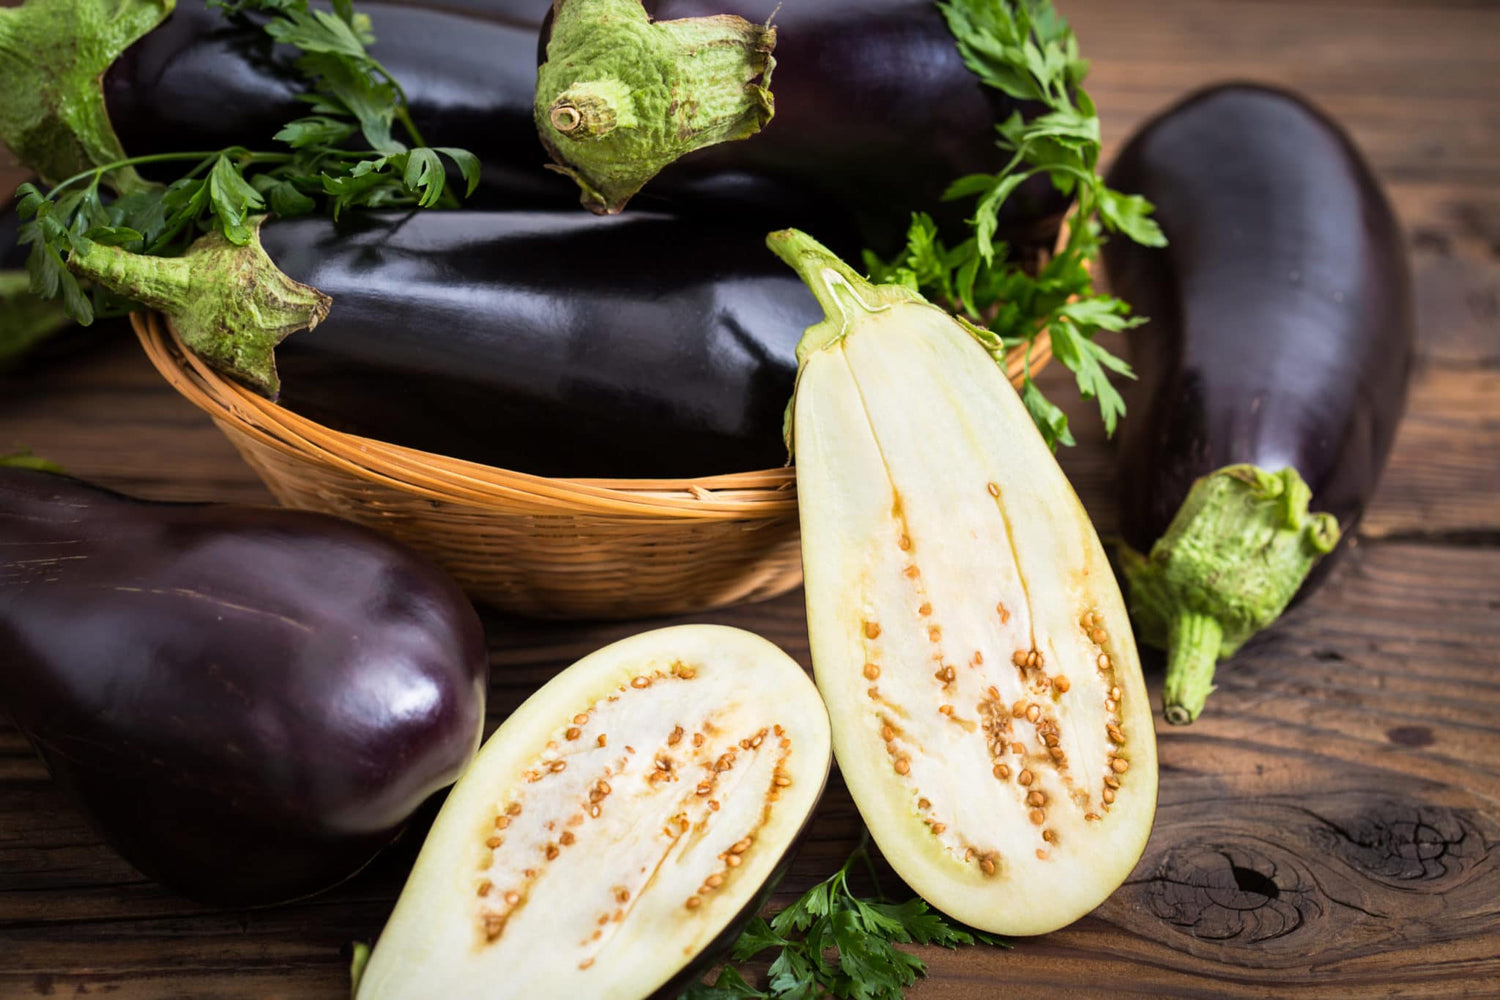 Smoked Marinated Eggplant Recipe